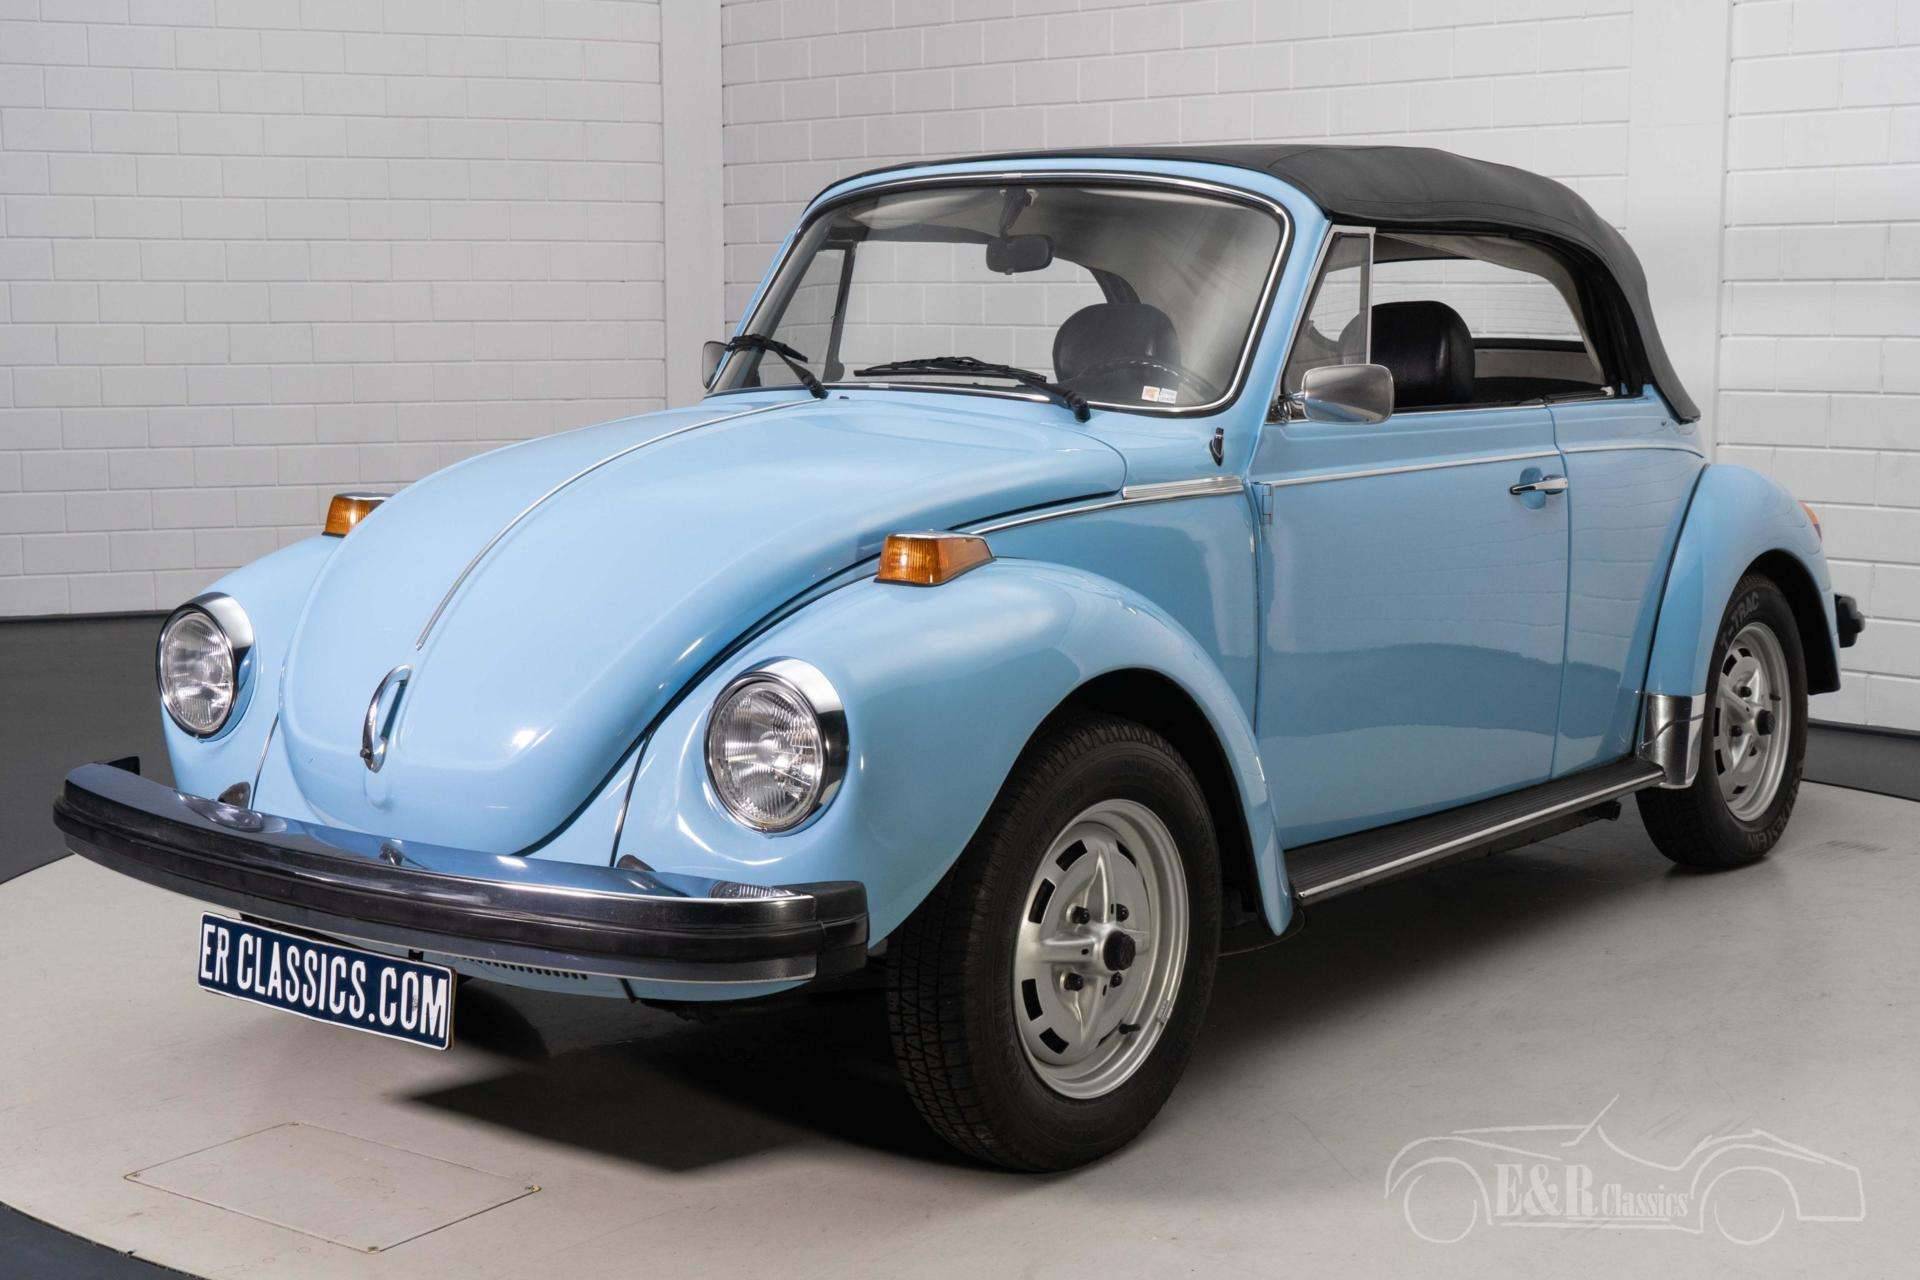 For Sale: Volkswagen Beetle 1303 (1979) offered for €29,950